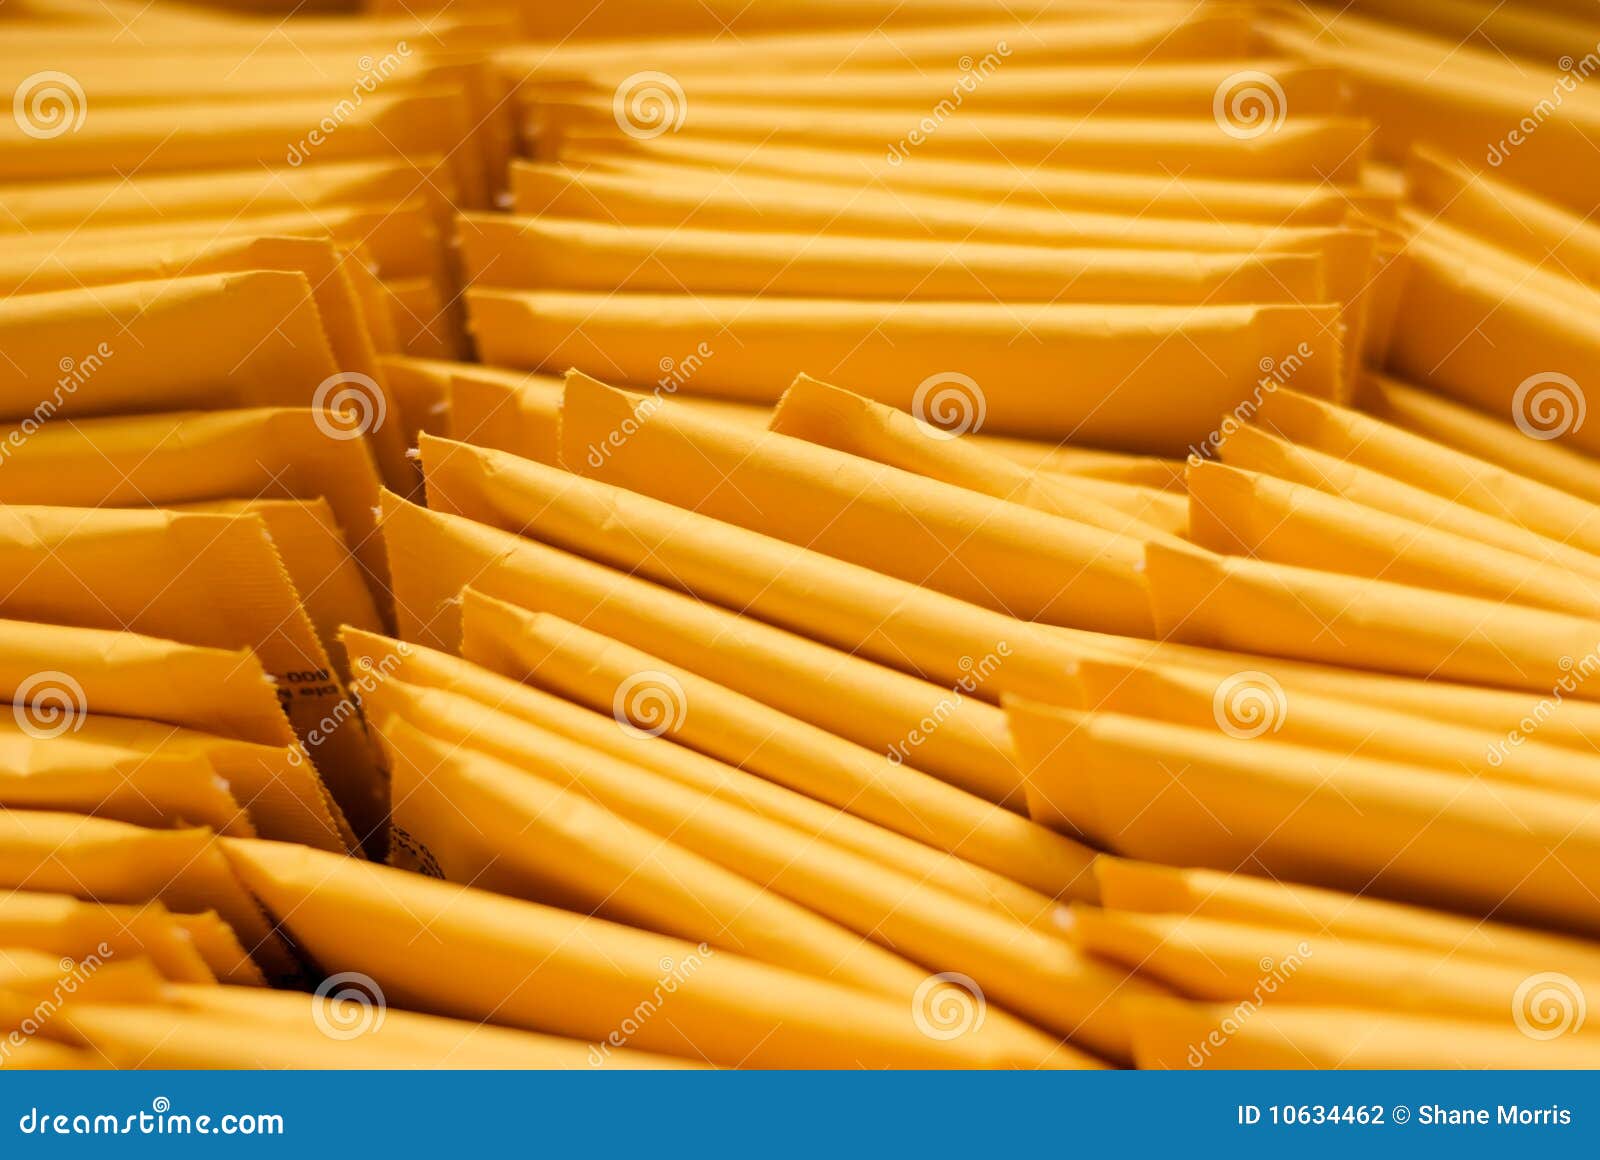 mailing envelopes-close up